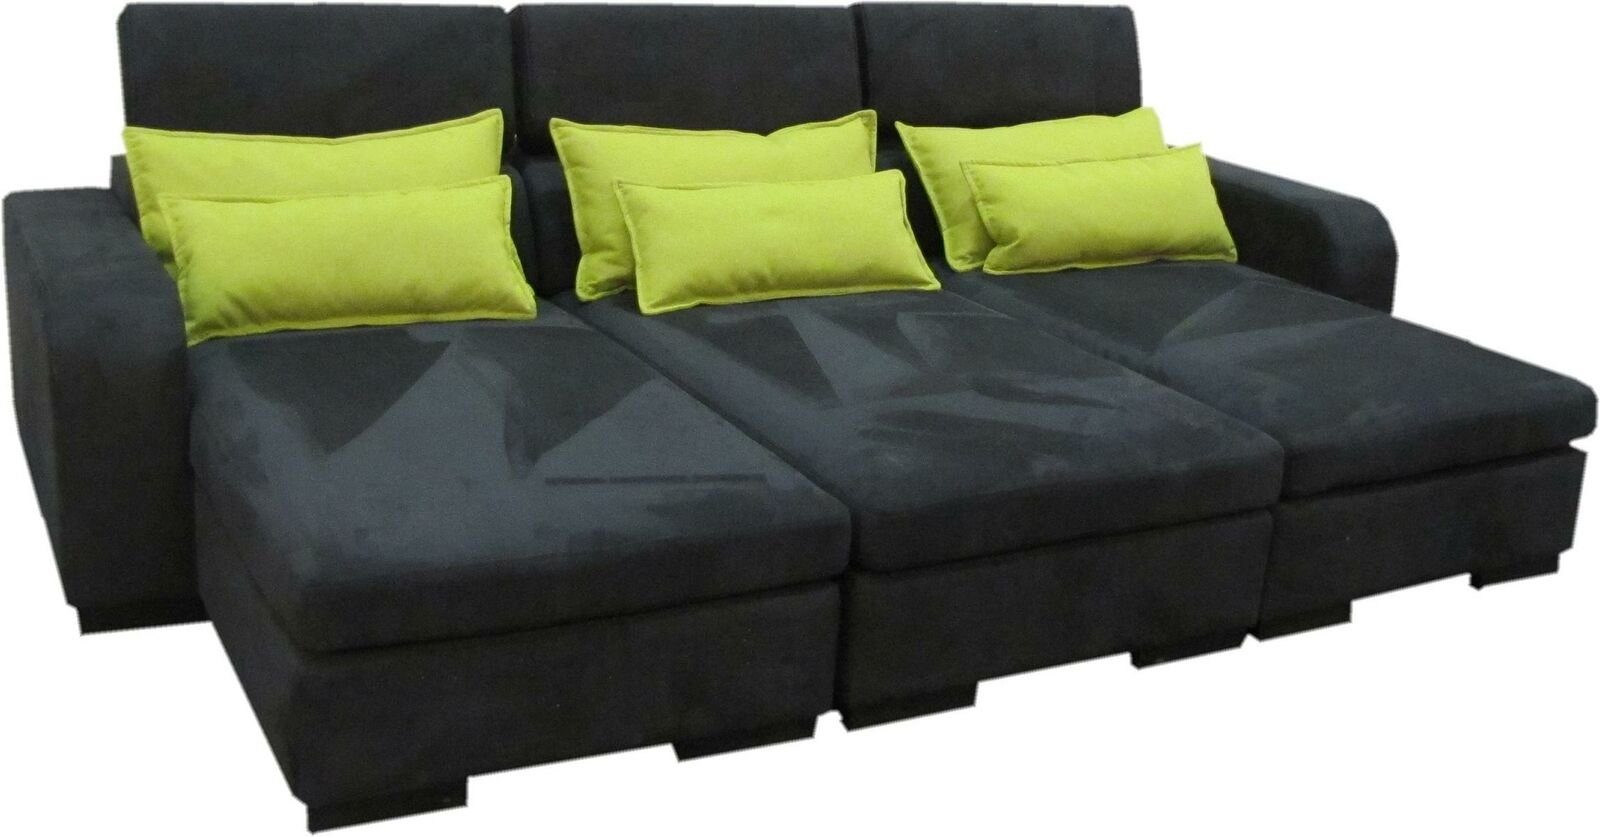 JVmoebel Sofa Großes Modernes Schwarzes Schlafsofa Luxus Design Stilvoll Neu, Made in Europe